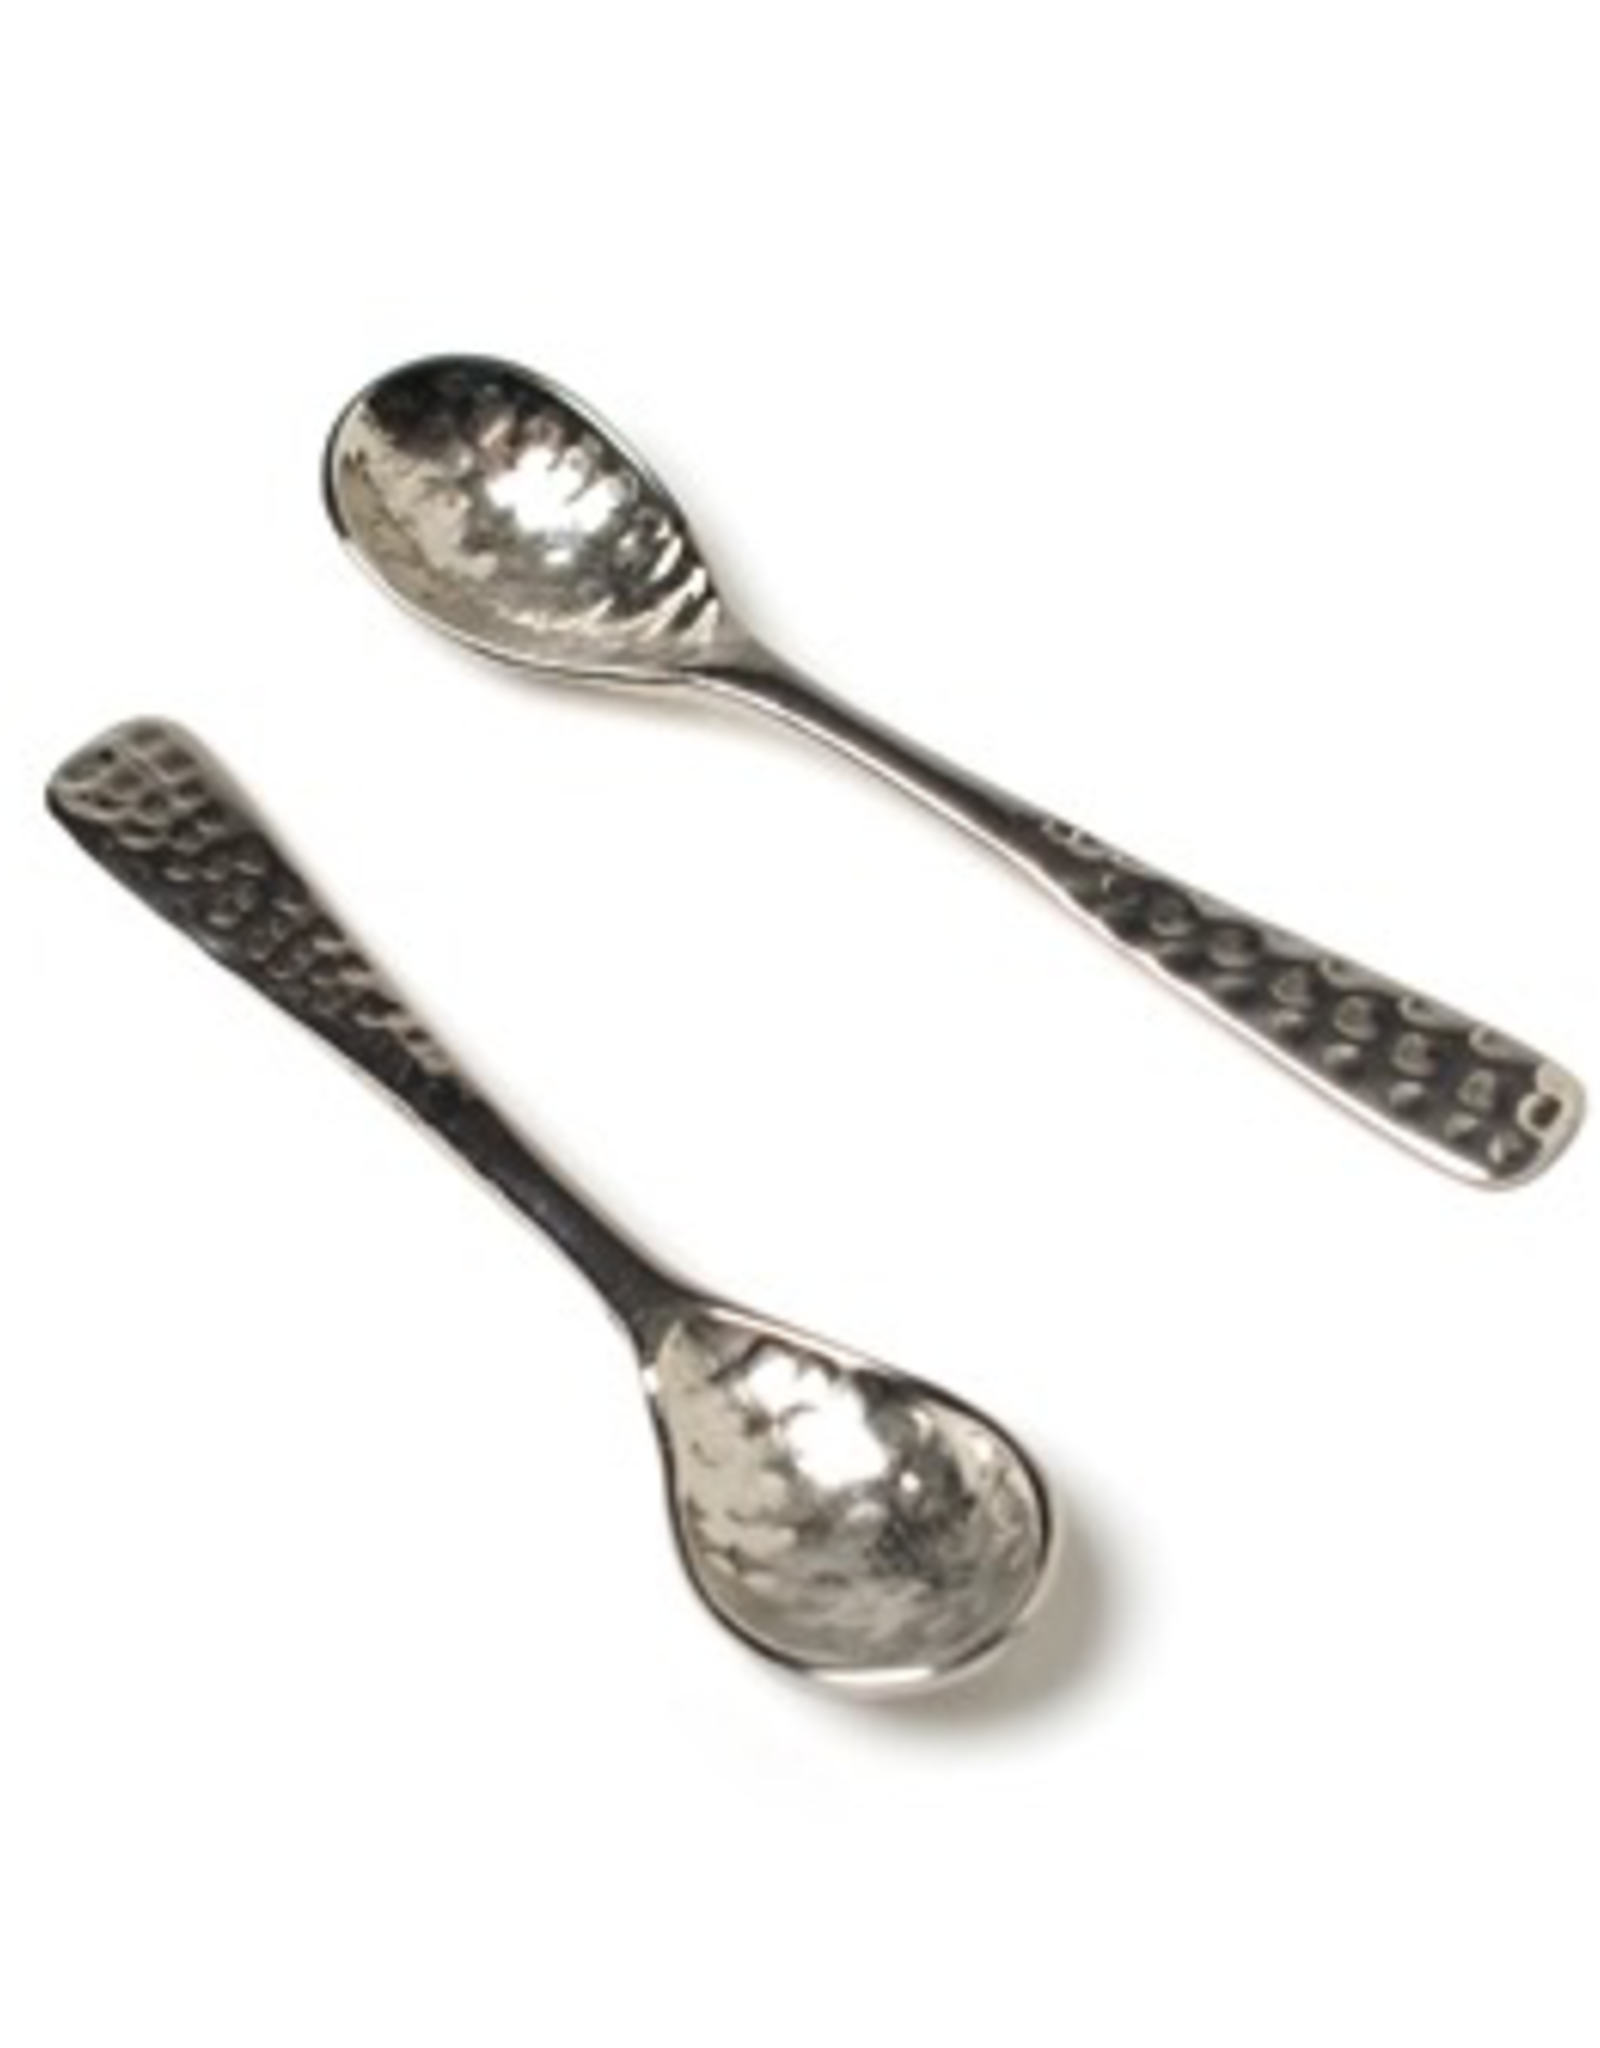 Mini Hammered Aluminum Spoon 2.5"